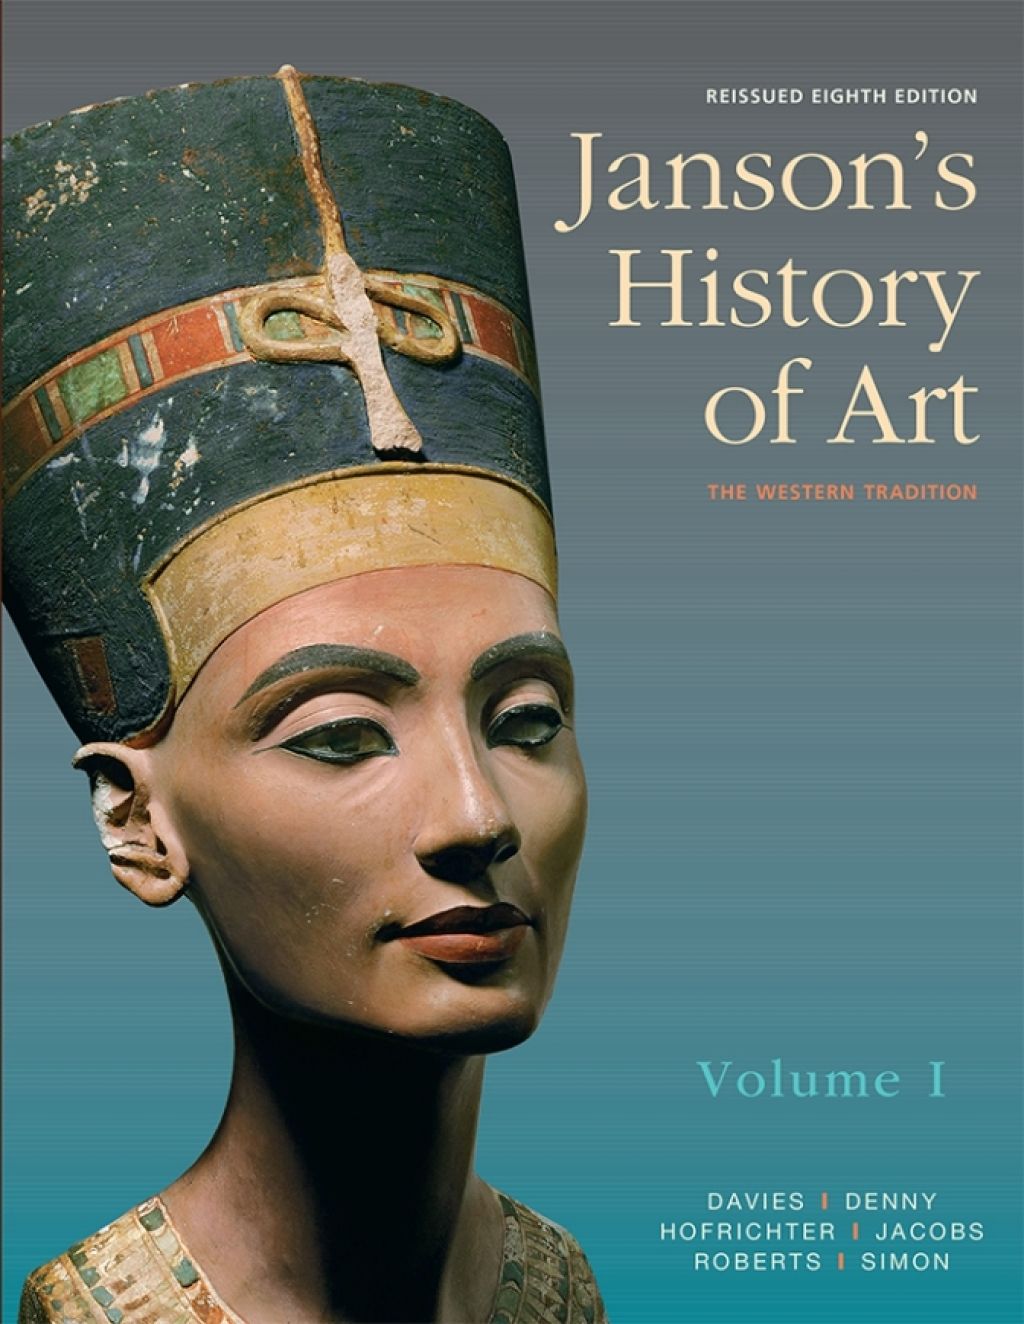 janson art history textbook pdf